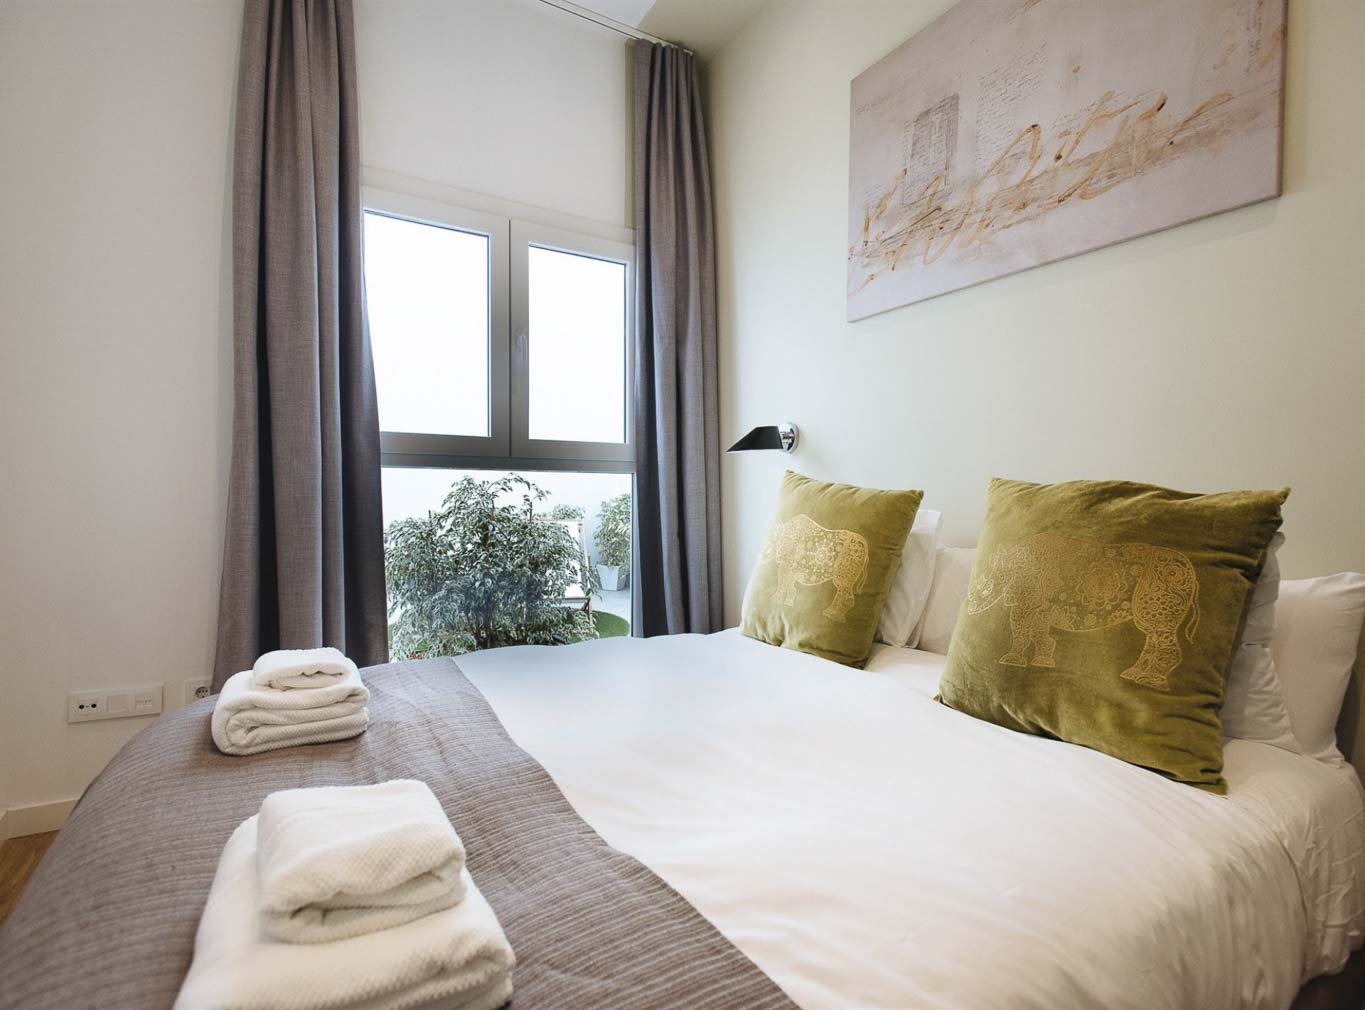 Lola 14 Tourist apartments with pool solarium in Seville – Magno Apartments